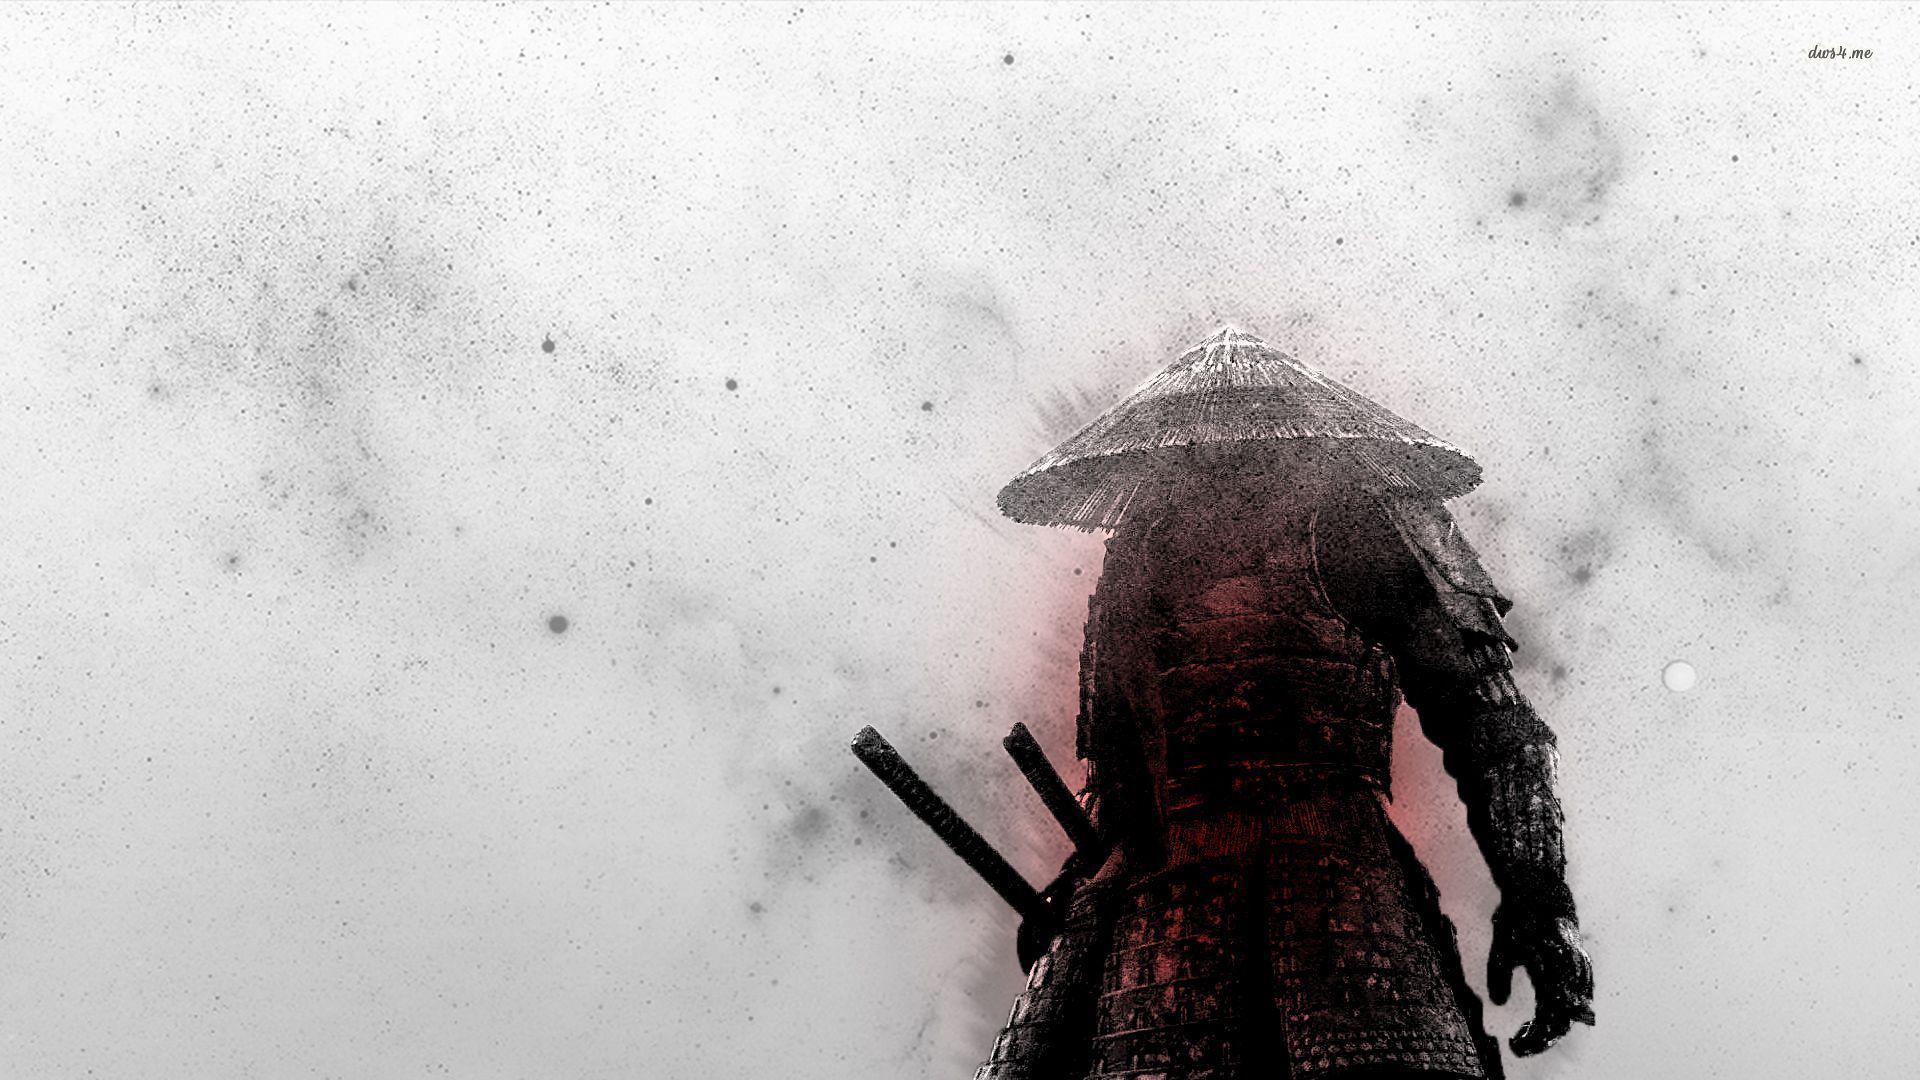 A samurai with two swords in the snow - Samurai